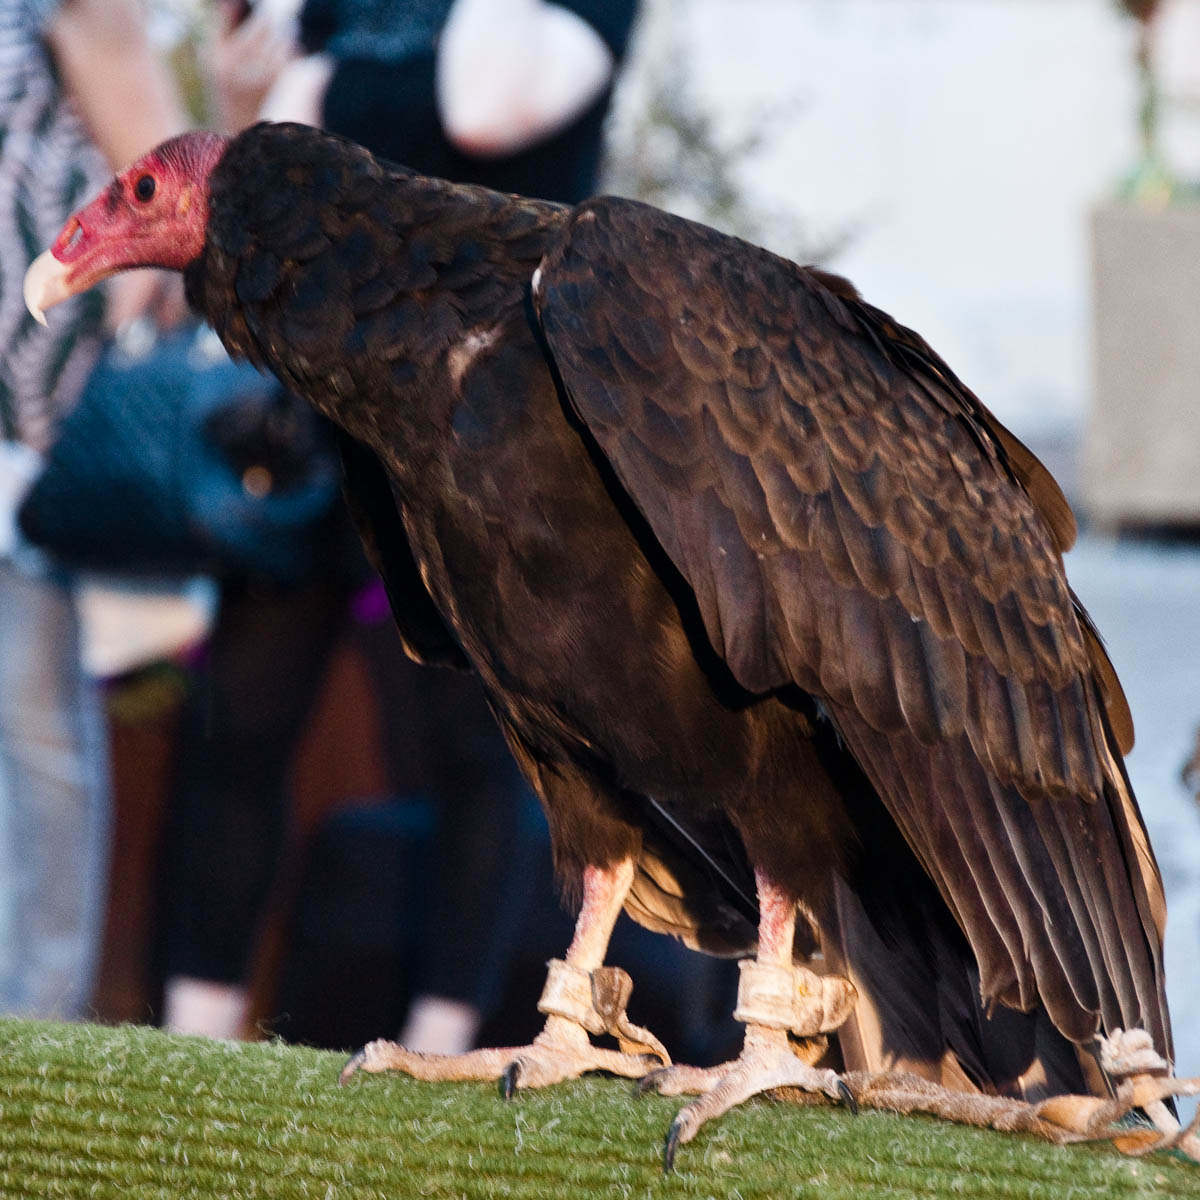 Vulture, The birds of prey stall, Mediaevil Fair, Castelfranco Veneto, Italy - www.rossiwrites.com